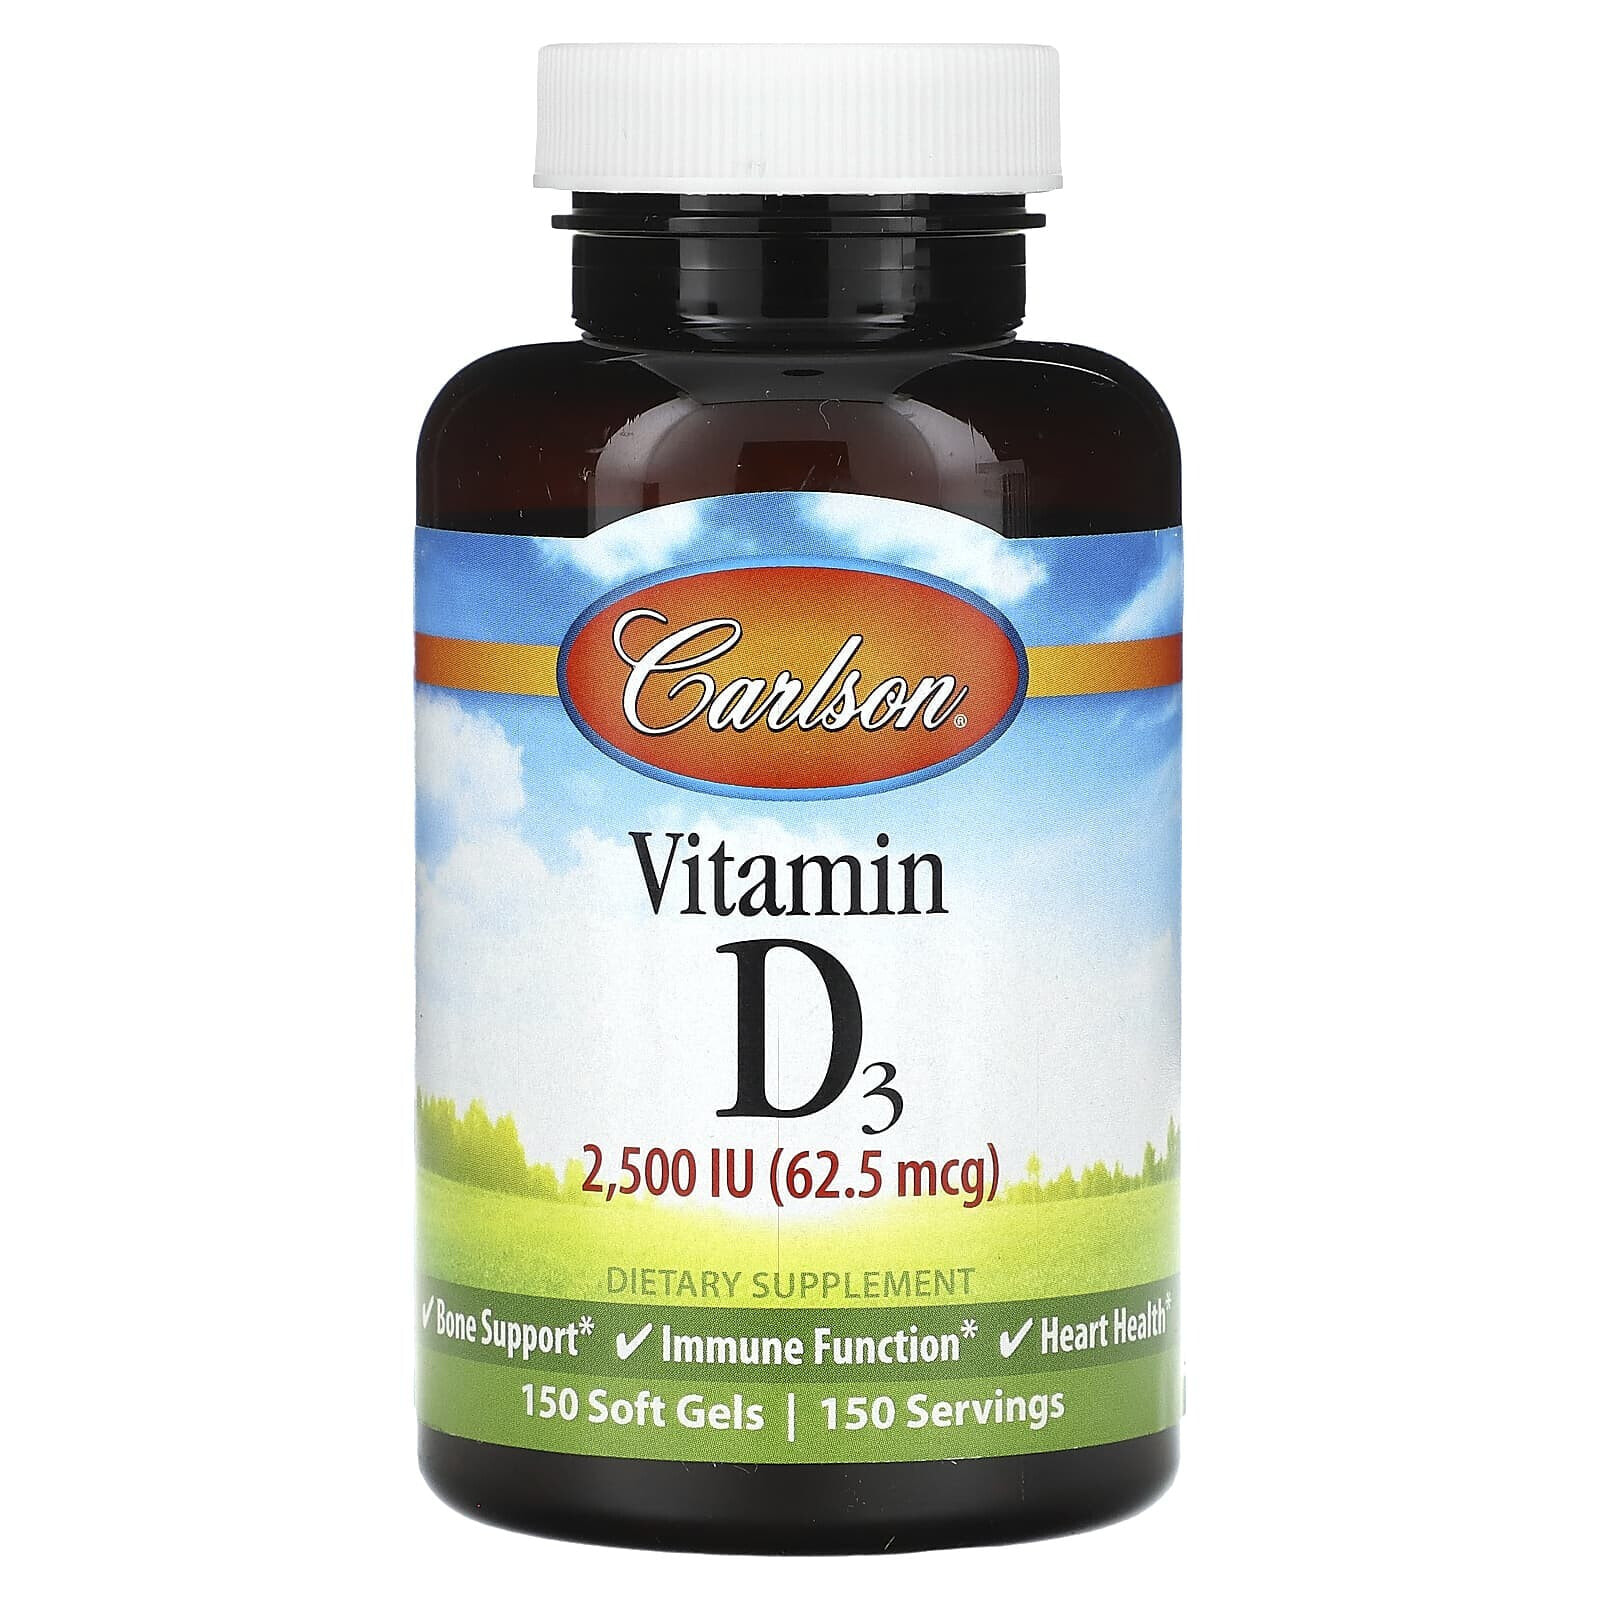 Carlson, Vitamin D3, 125 mg (5,000 IU), 120 Soft Gels